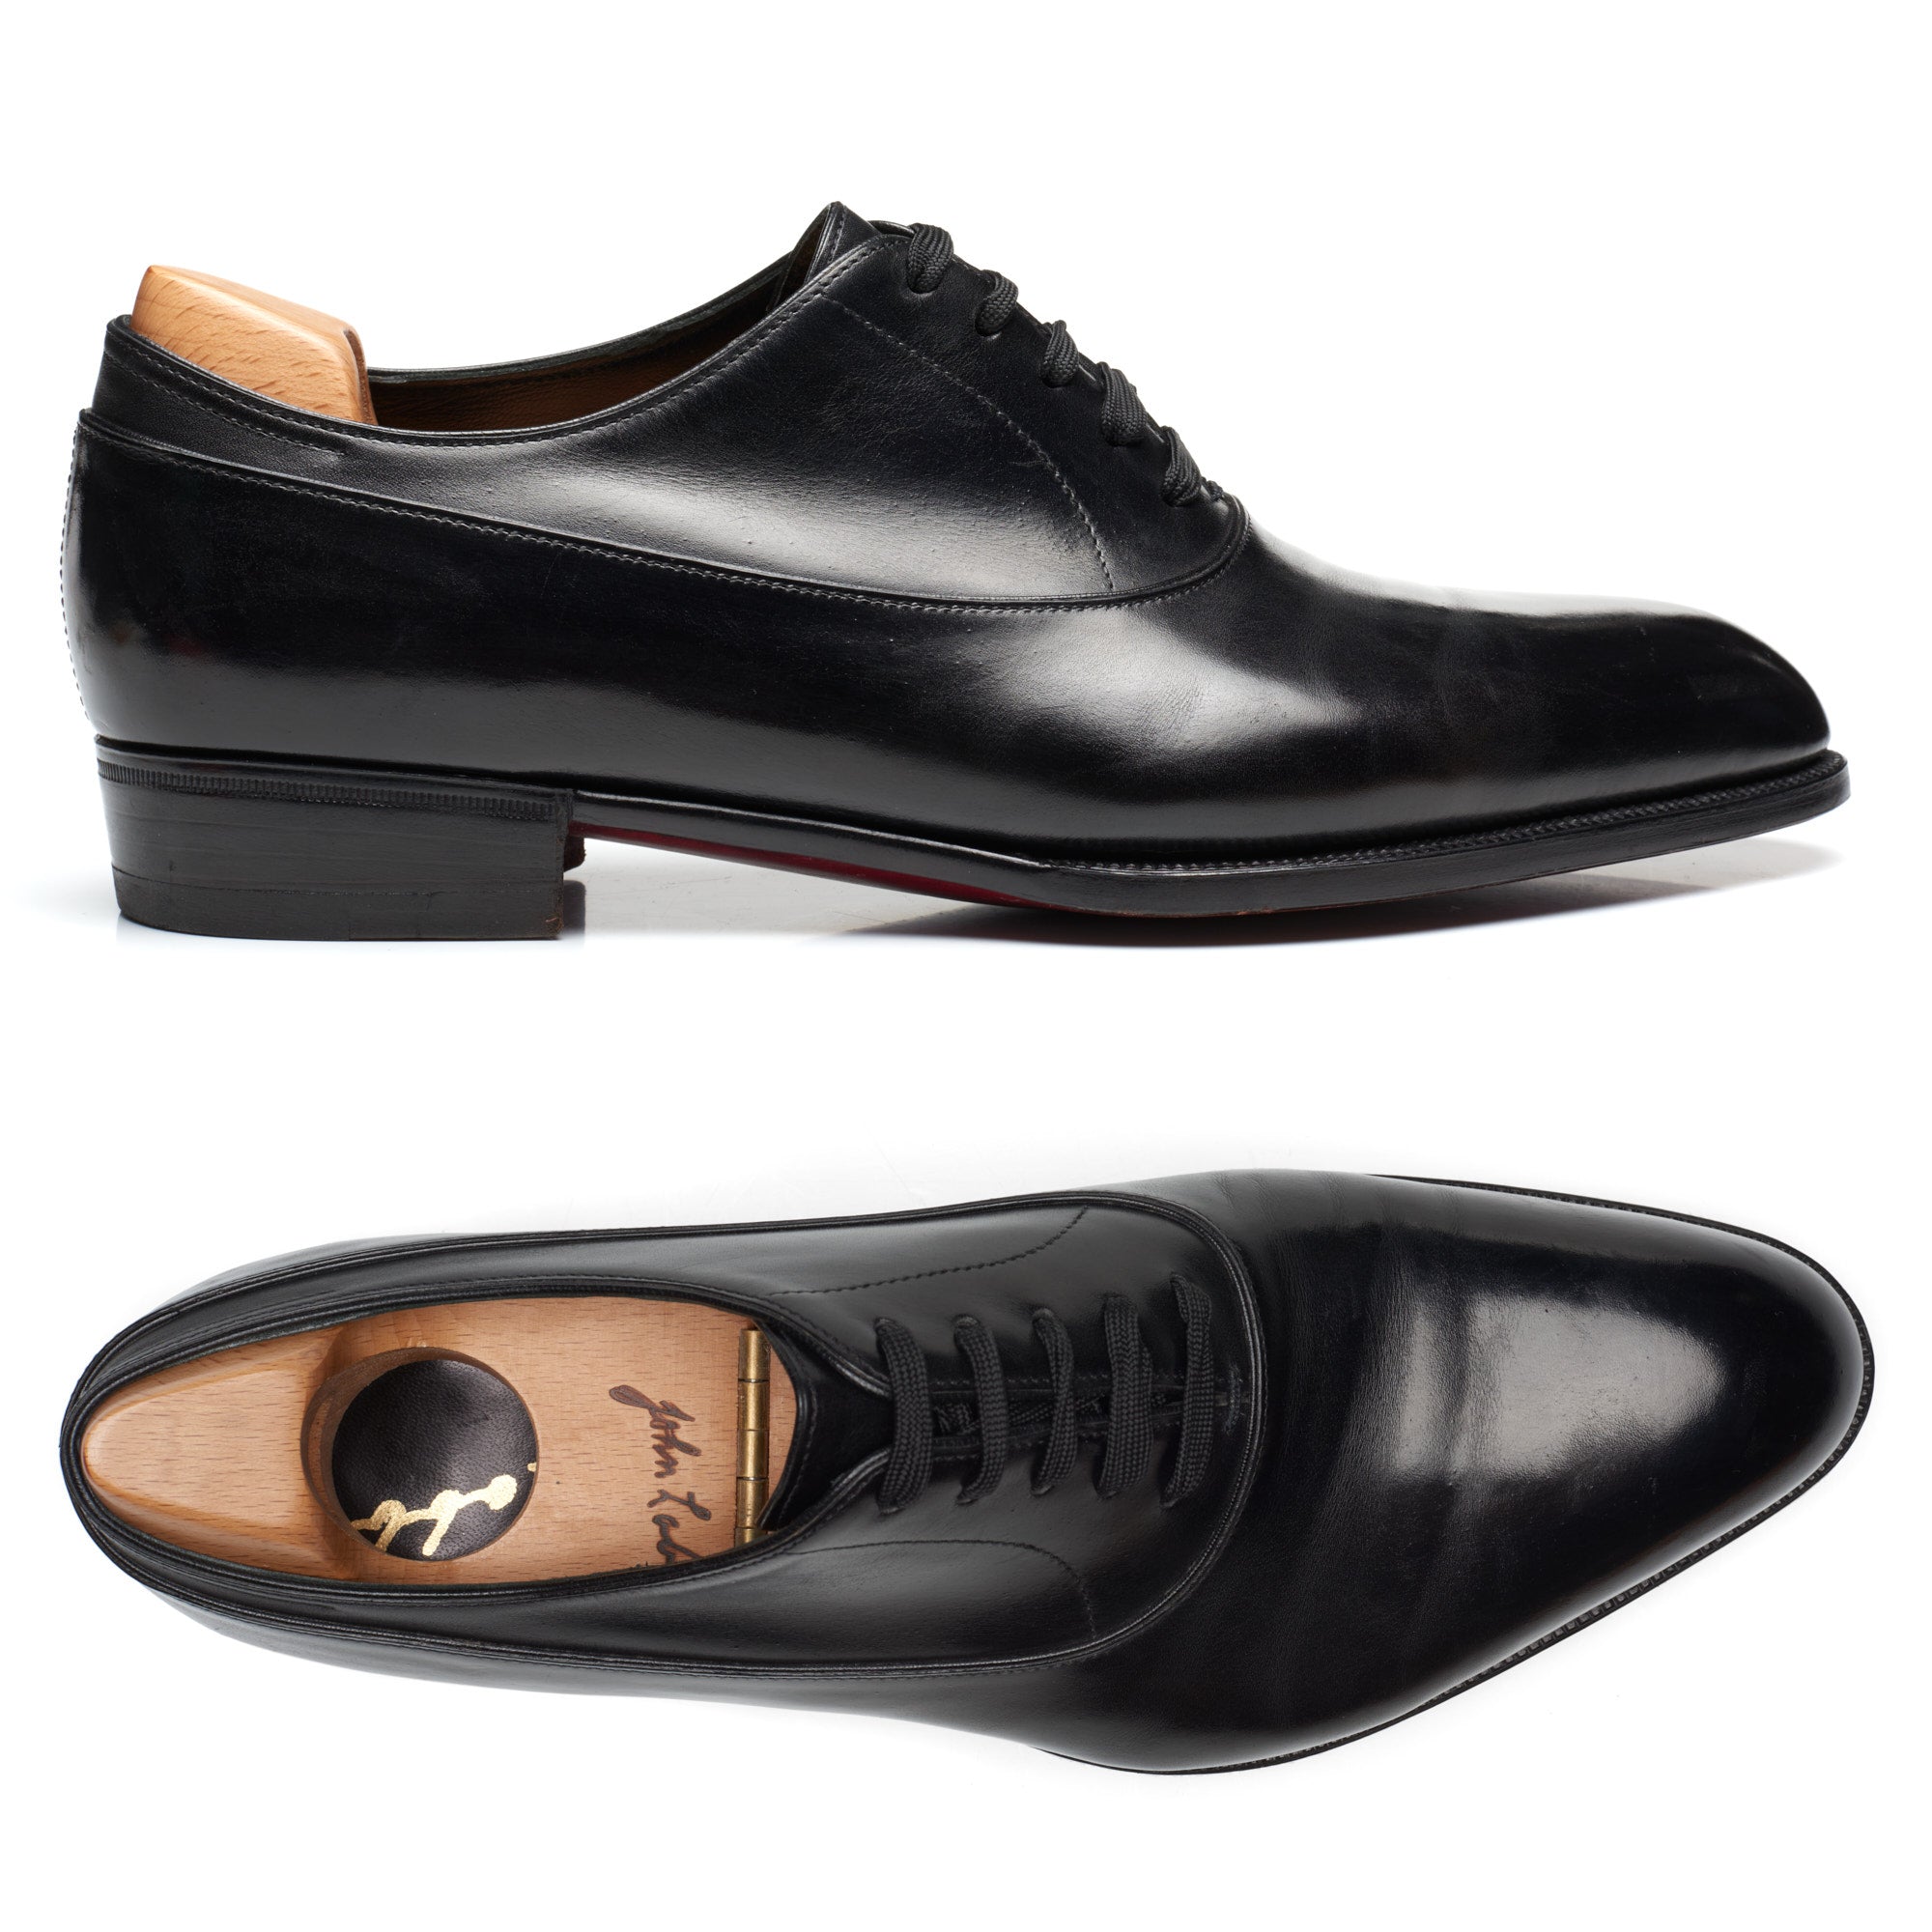 JOHN LOBB Paris Bespoke Black Calf Leather Balmoral Oxford Shoes UK 7.5 US  8.5